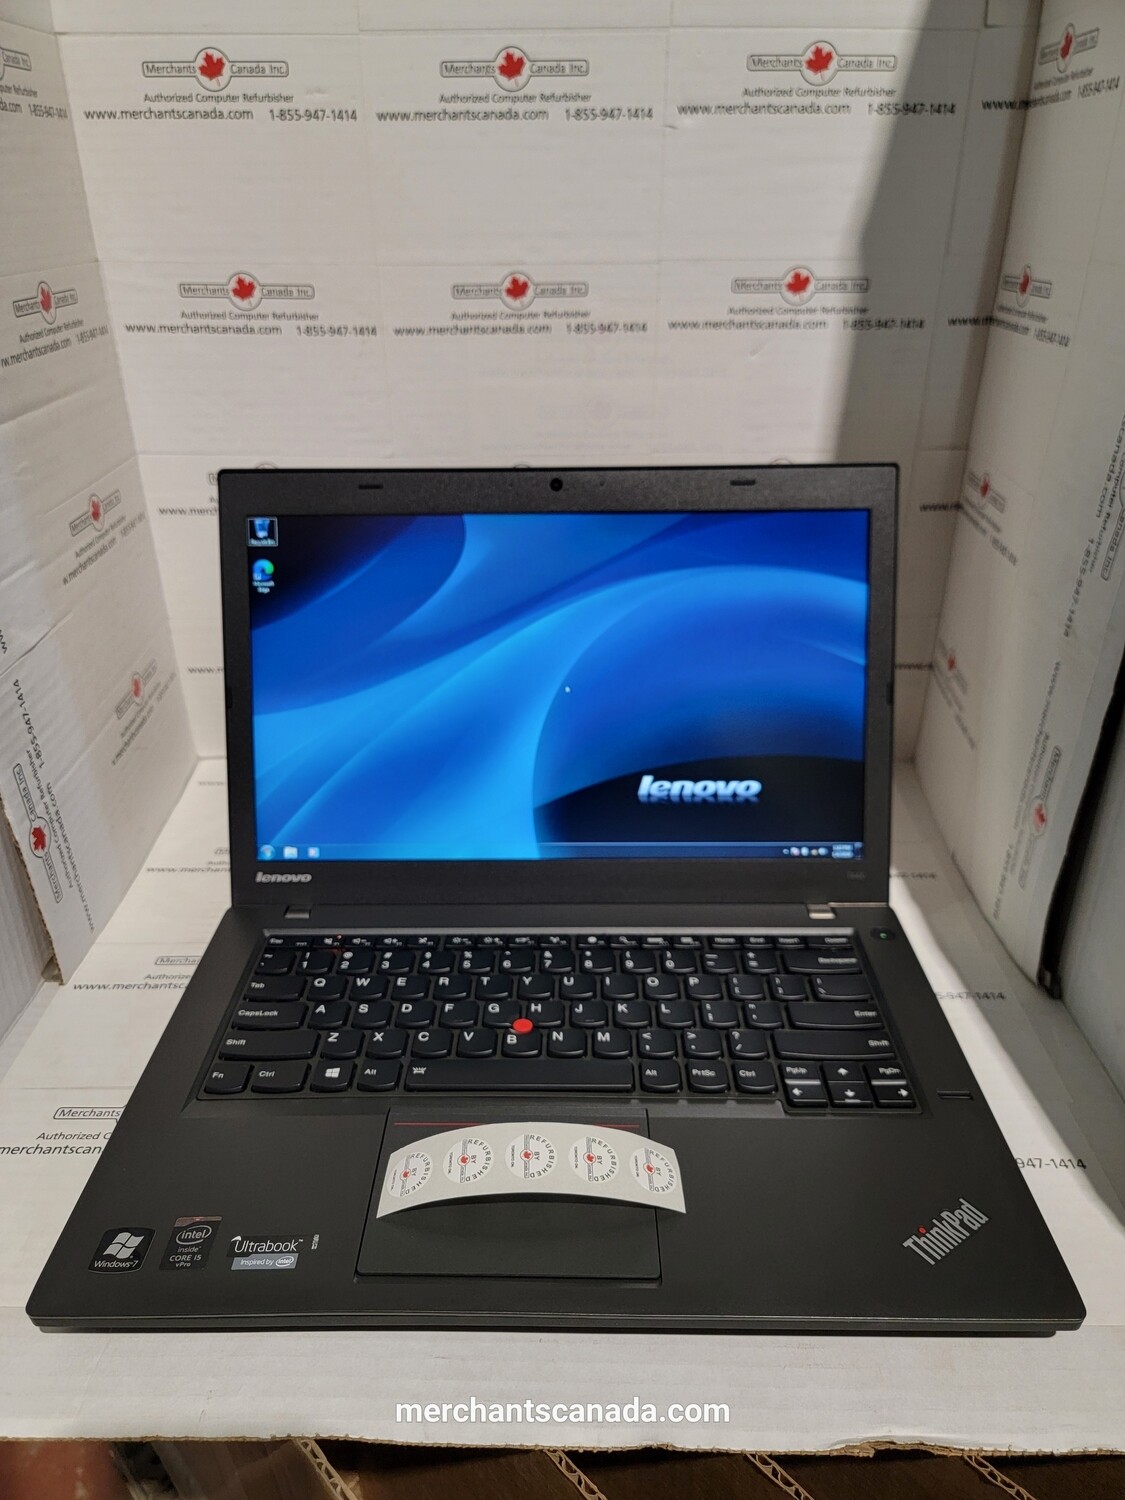 Lenovo ThinkPad T440 Core i5-4300U @ 1.9 GHz | 8GB | 128GB SSD | 14" HD+ LED (1600 x 900) | Windows 7 Professional | (20B7-S0Y70P